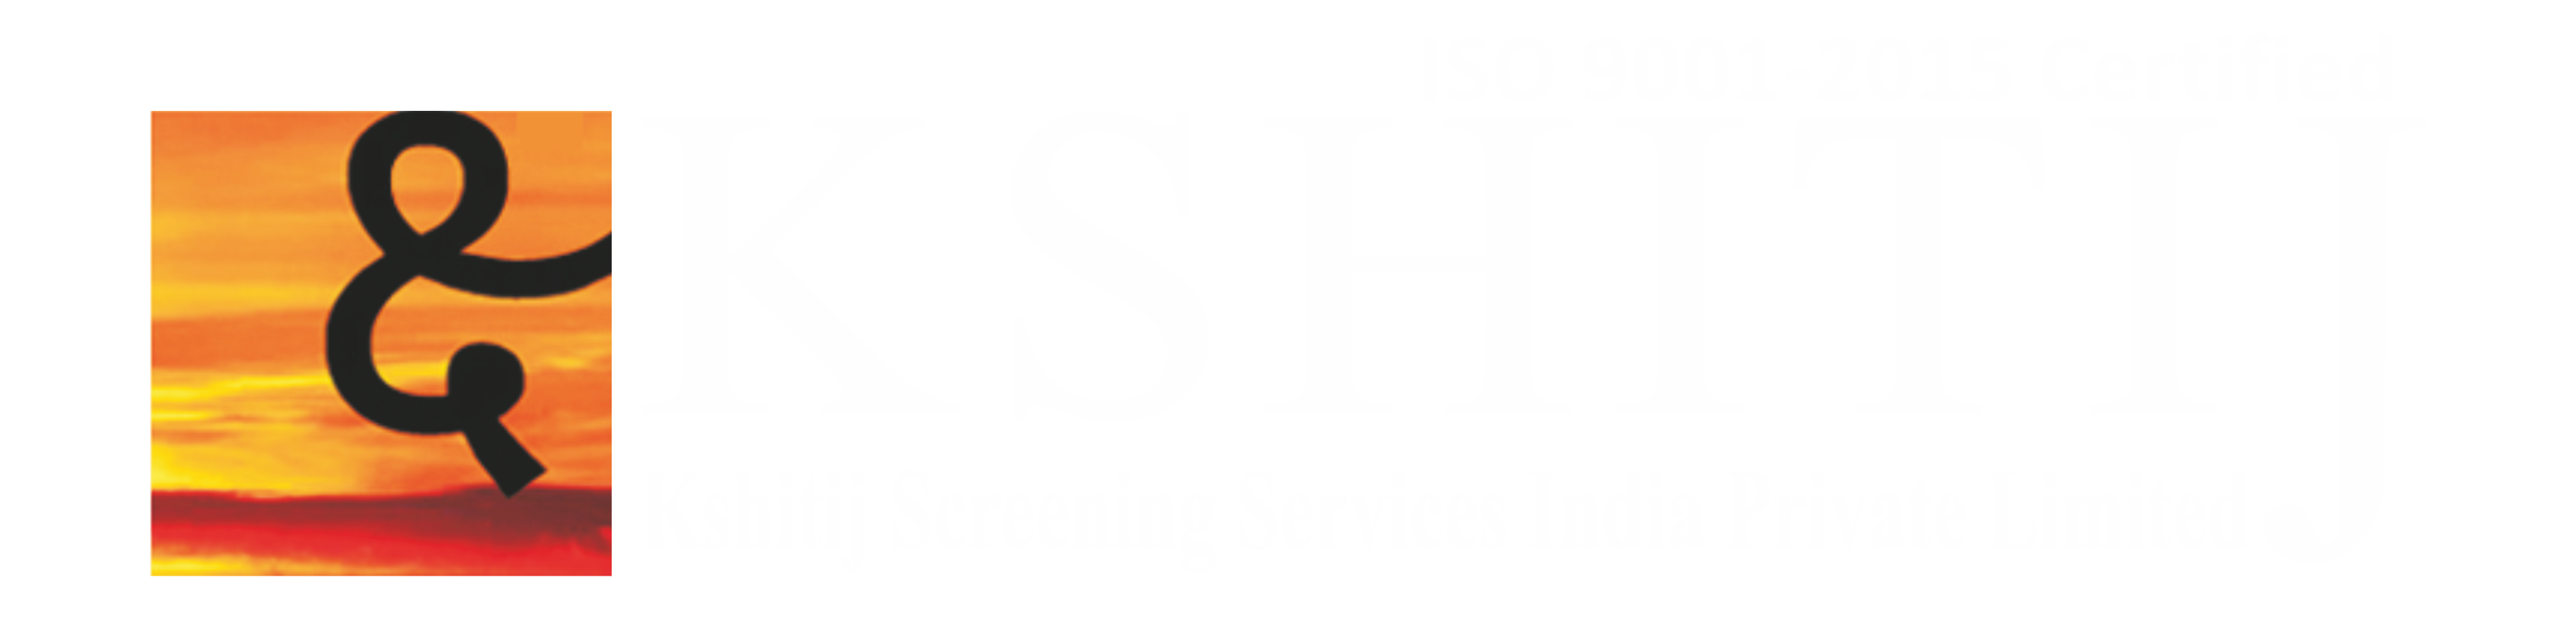 Kshitij-Screening-Services-logo